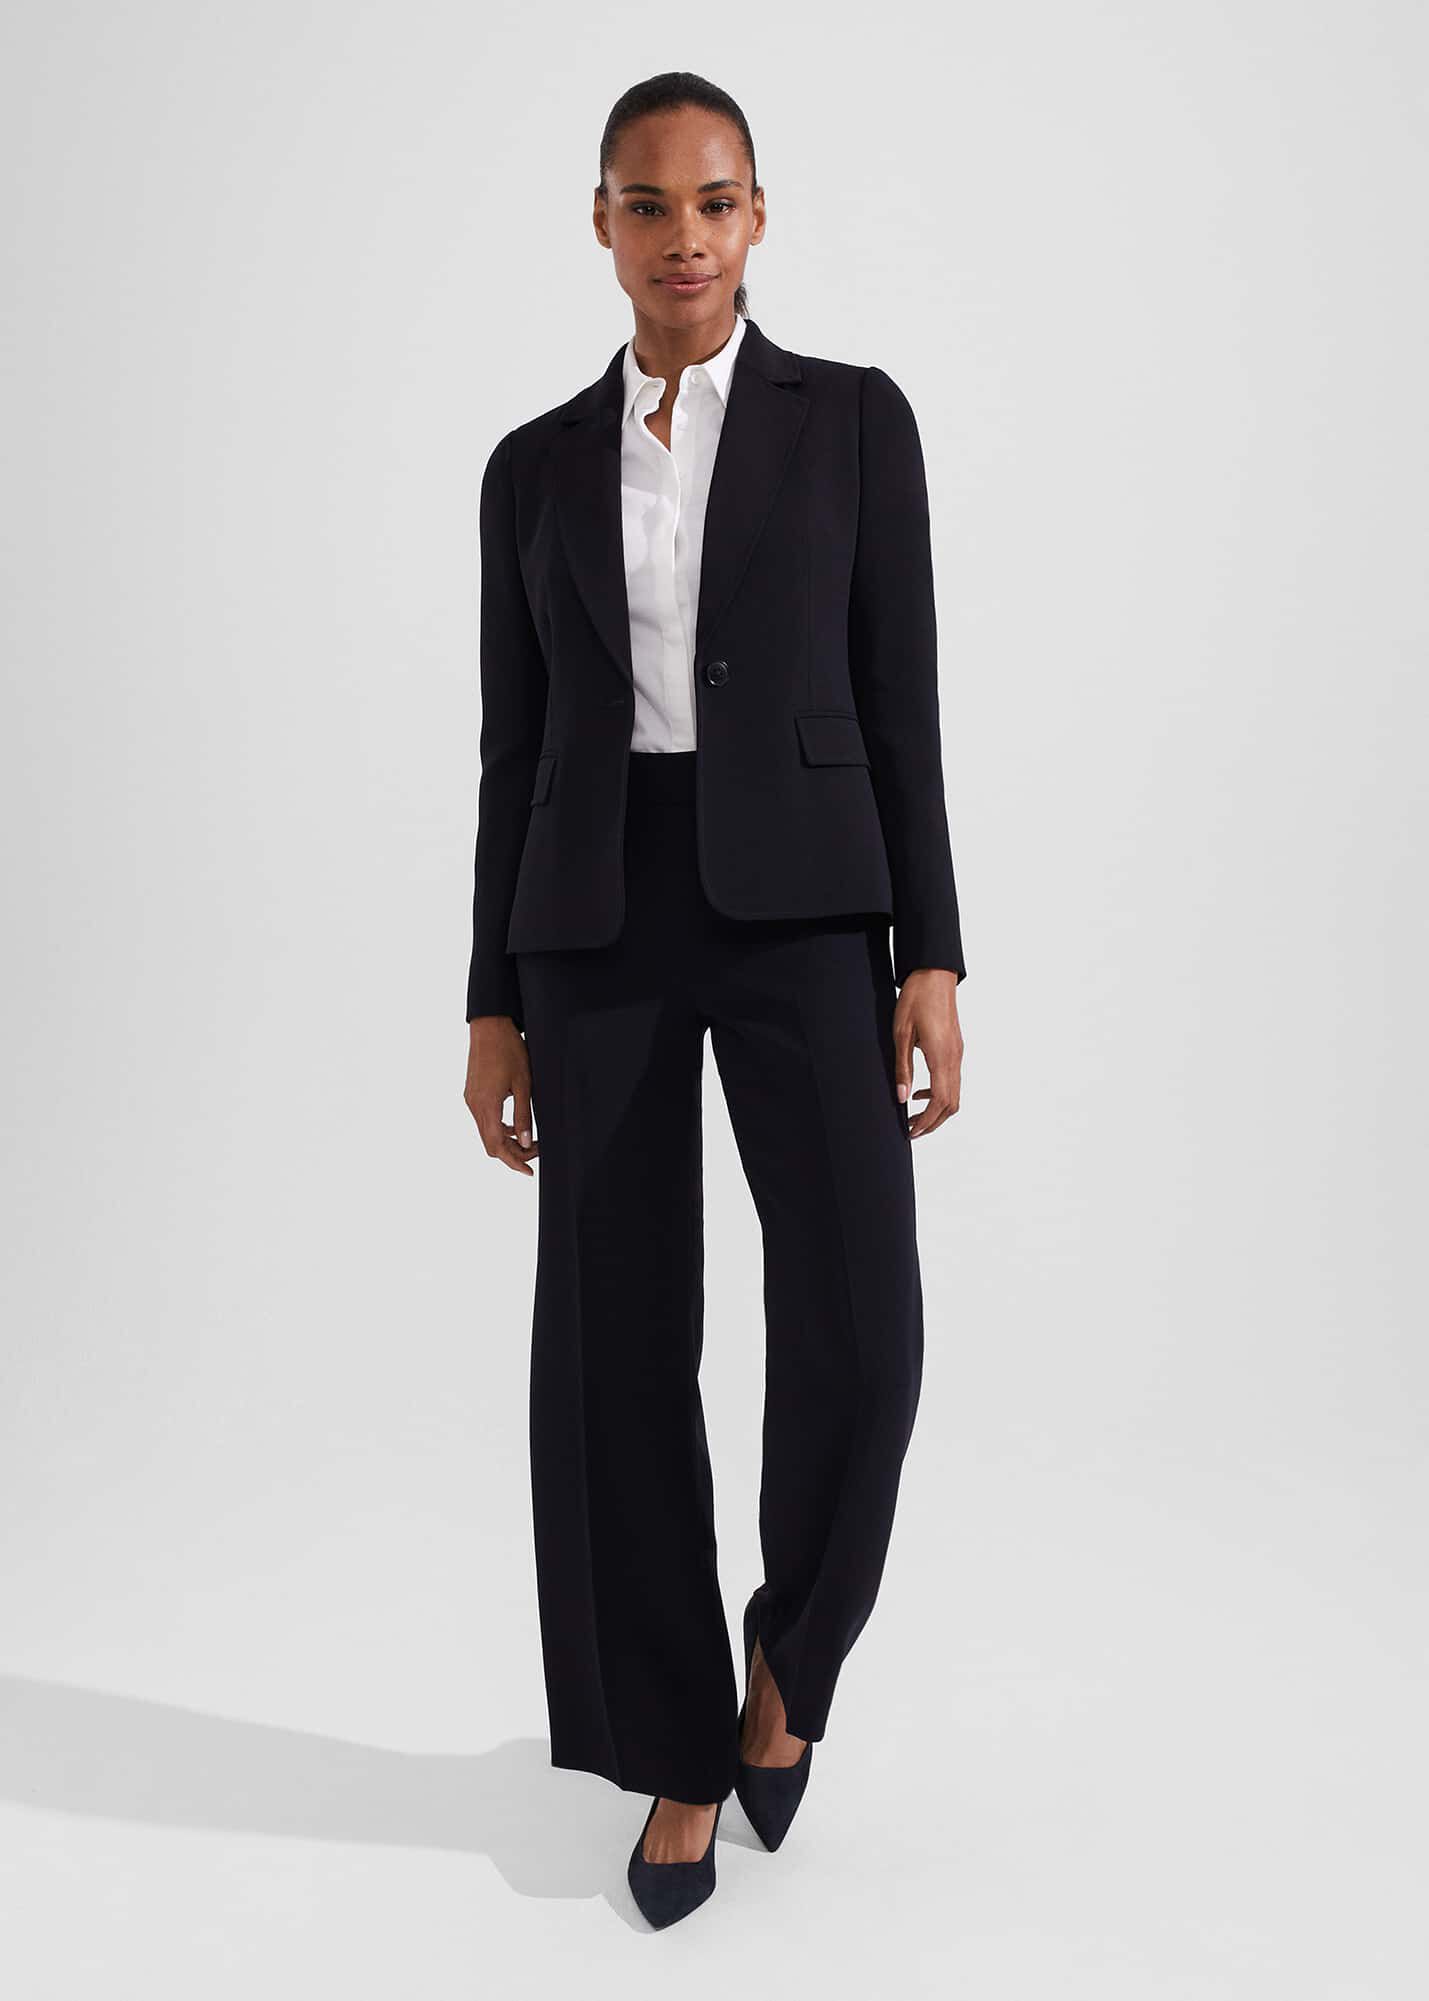 Women's Suits & Tailoring | Next Official Site